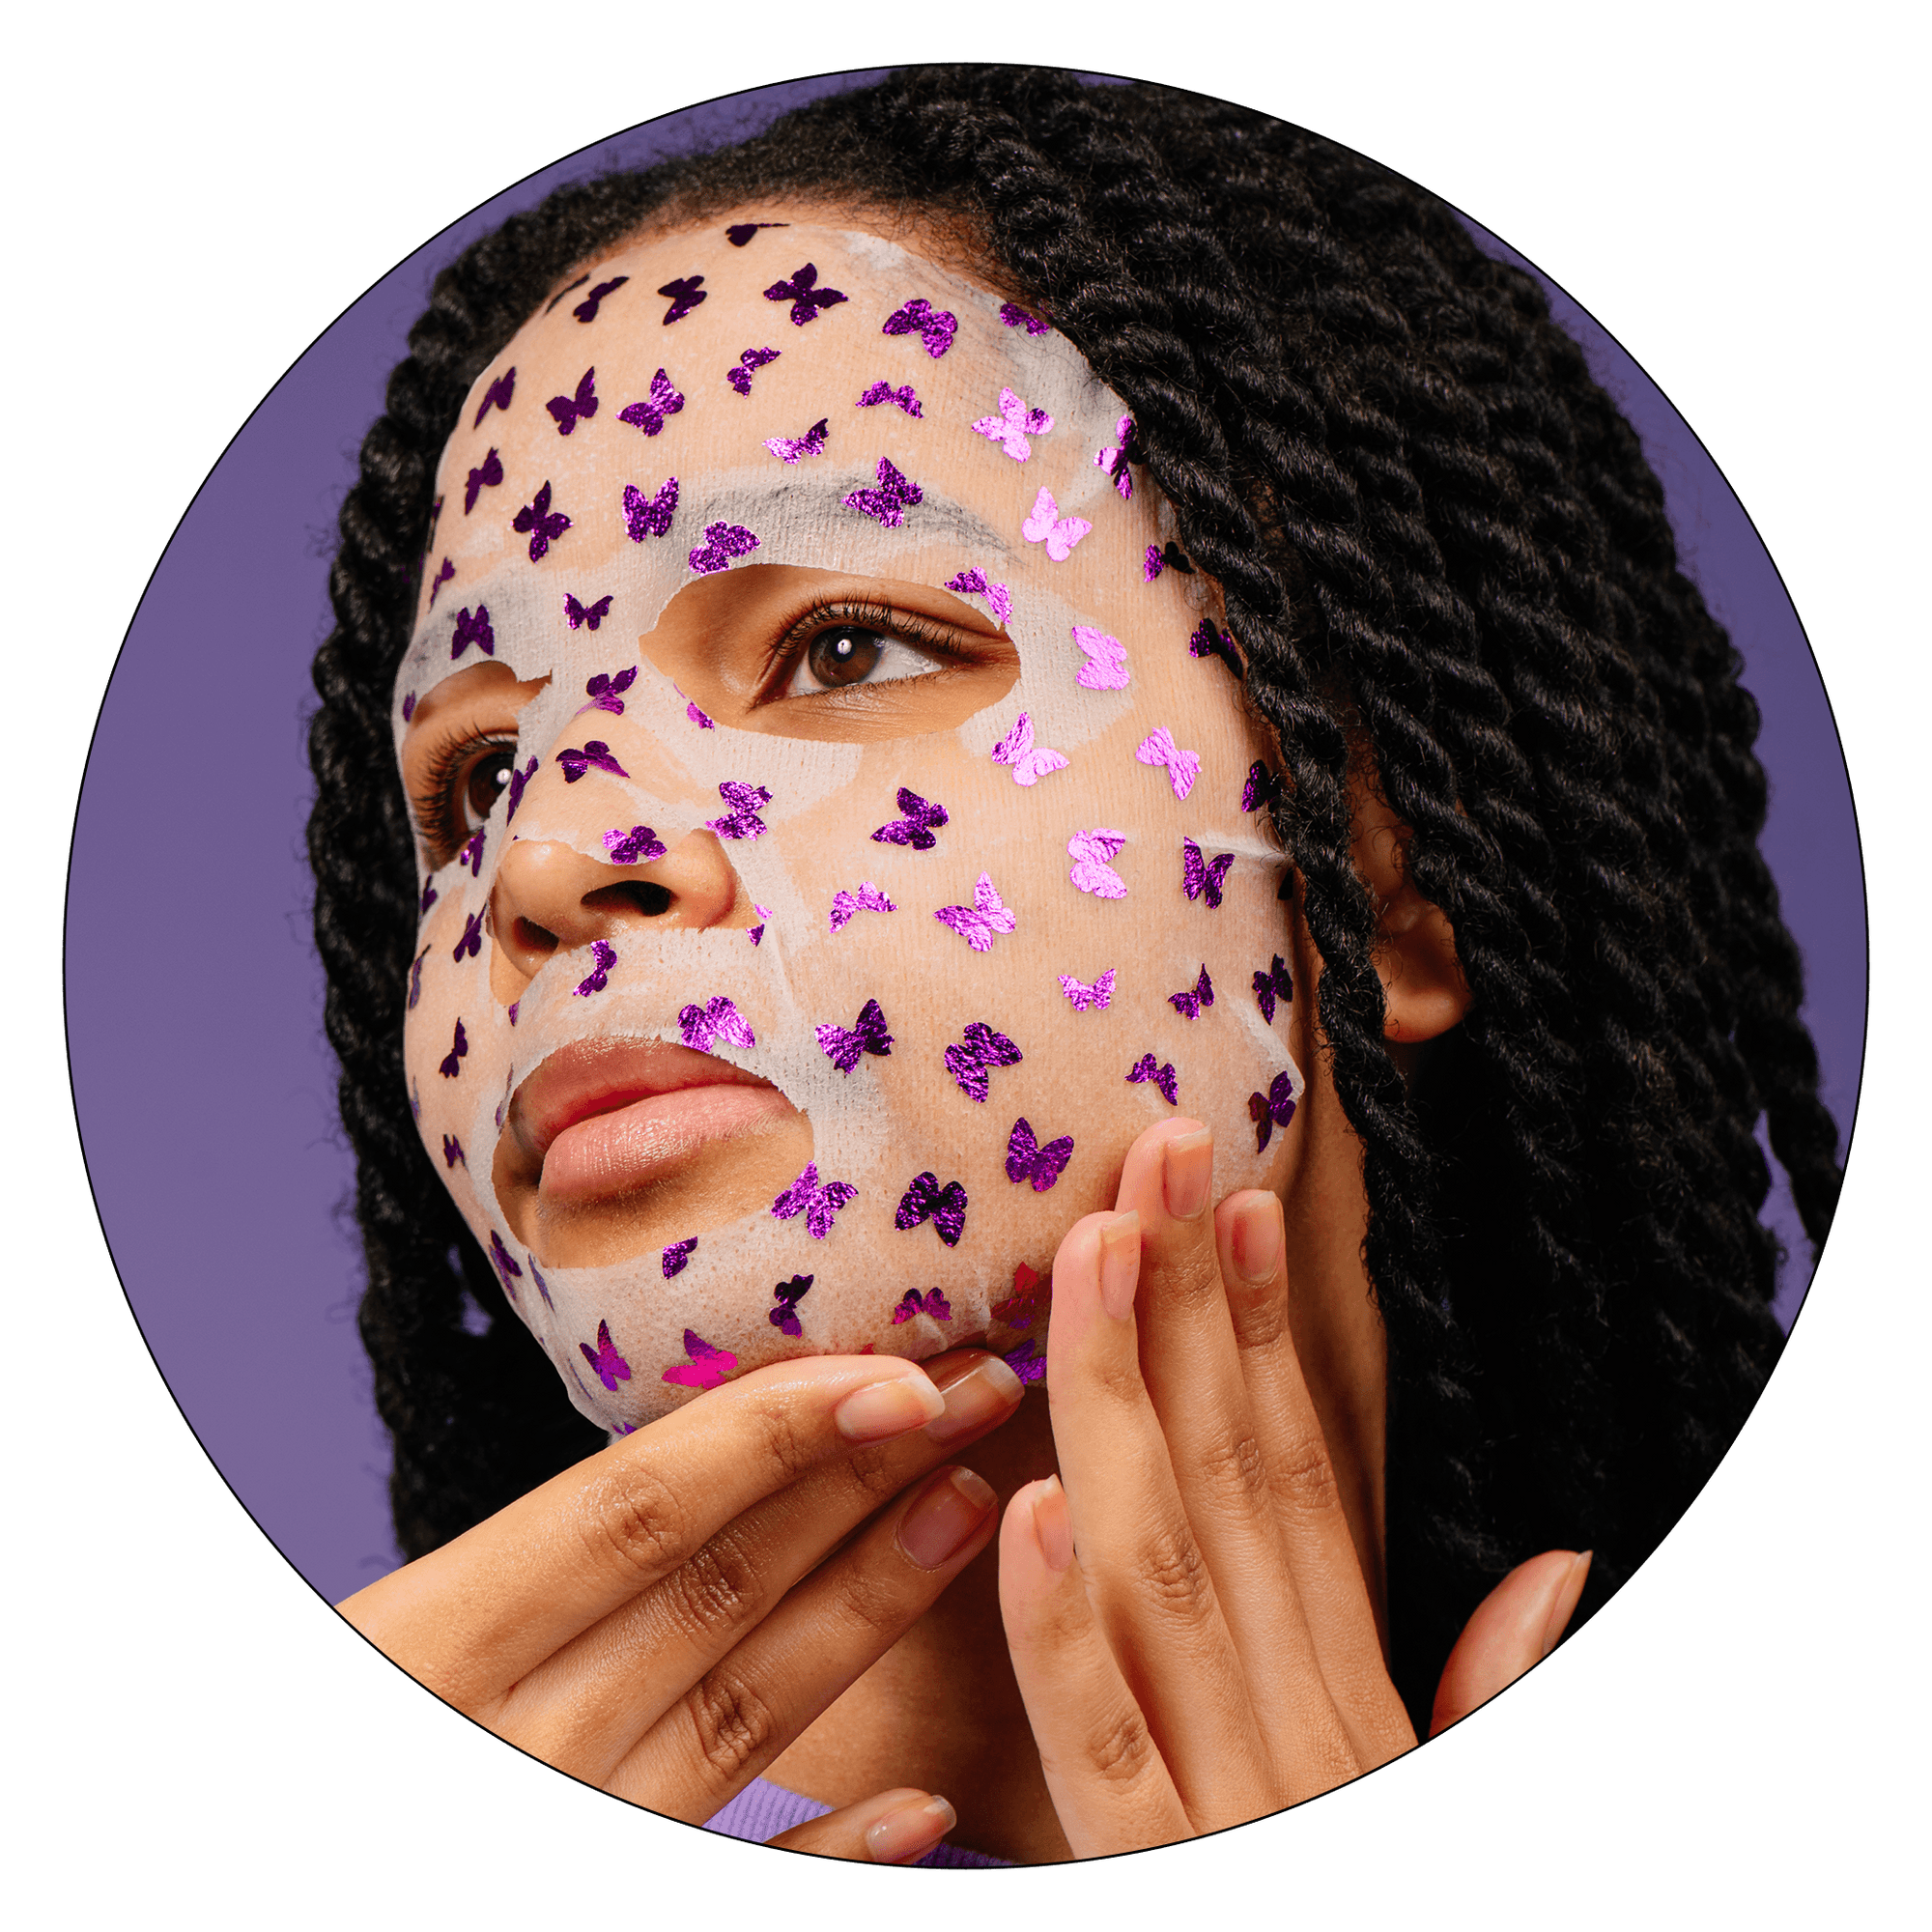 Power Hydrate Blossom Nectar Metallic Face Sheet Mask - Vitamasques